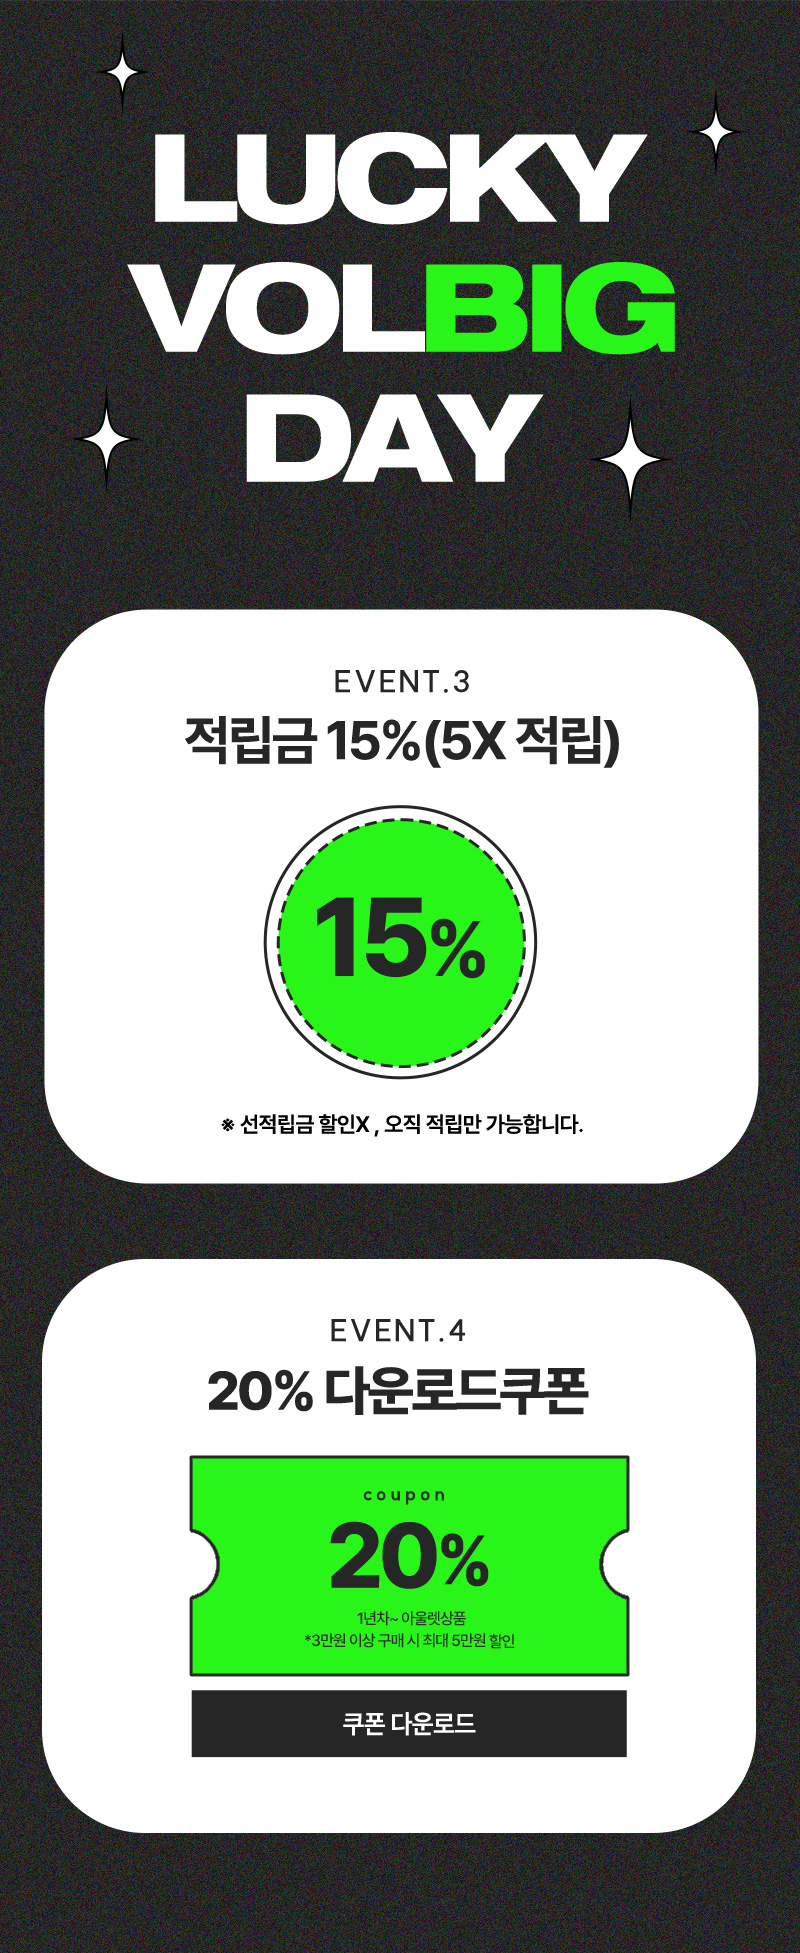 event.3  15%, event.4 20% ٿε 